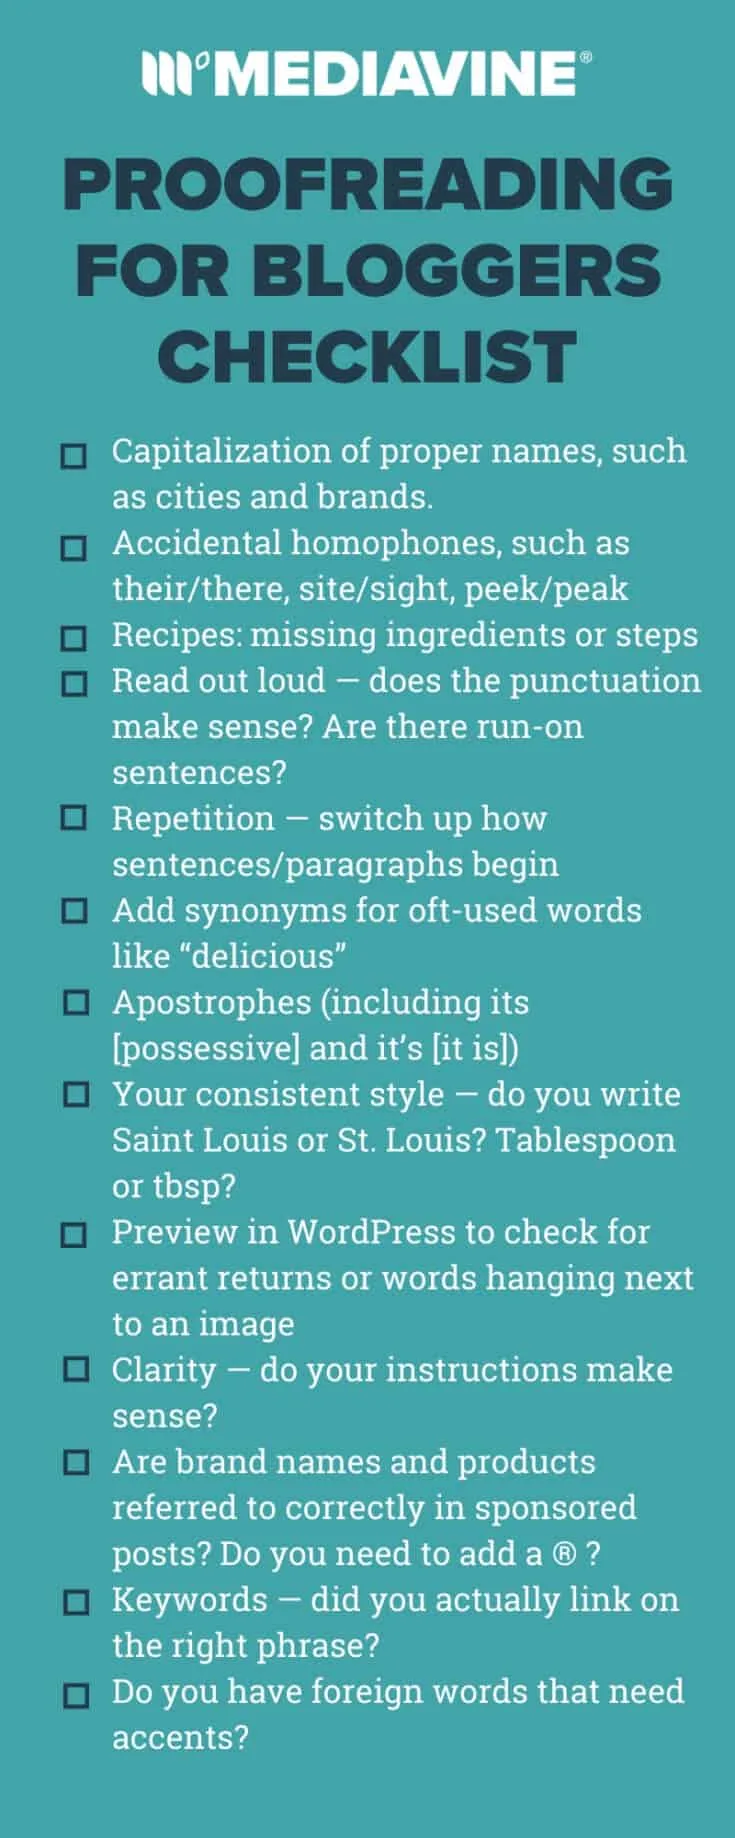 Mediavine proofreeding for bloggers checklist infographic